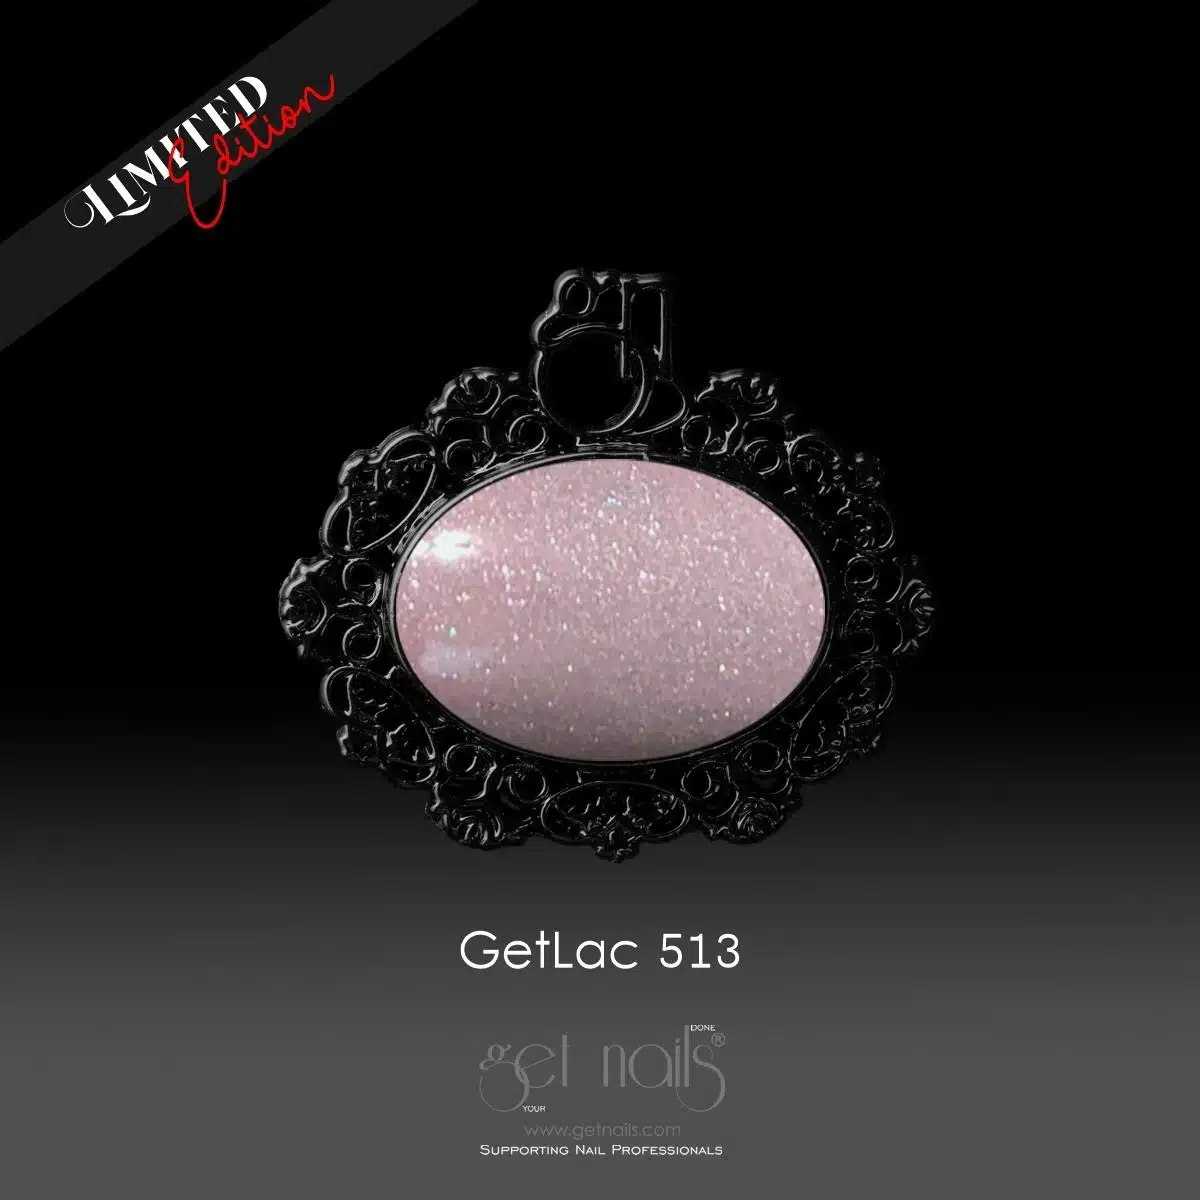 Get Nails Austria - GetLac 513 15g